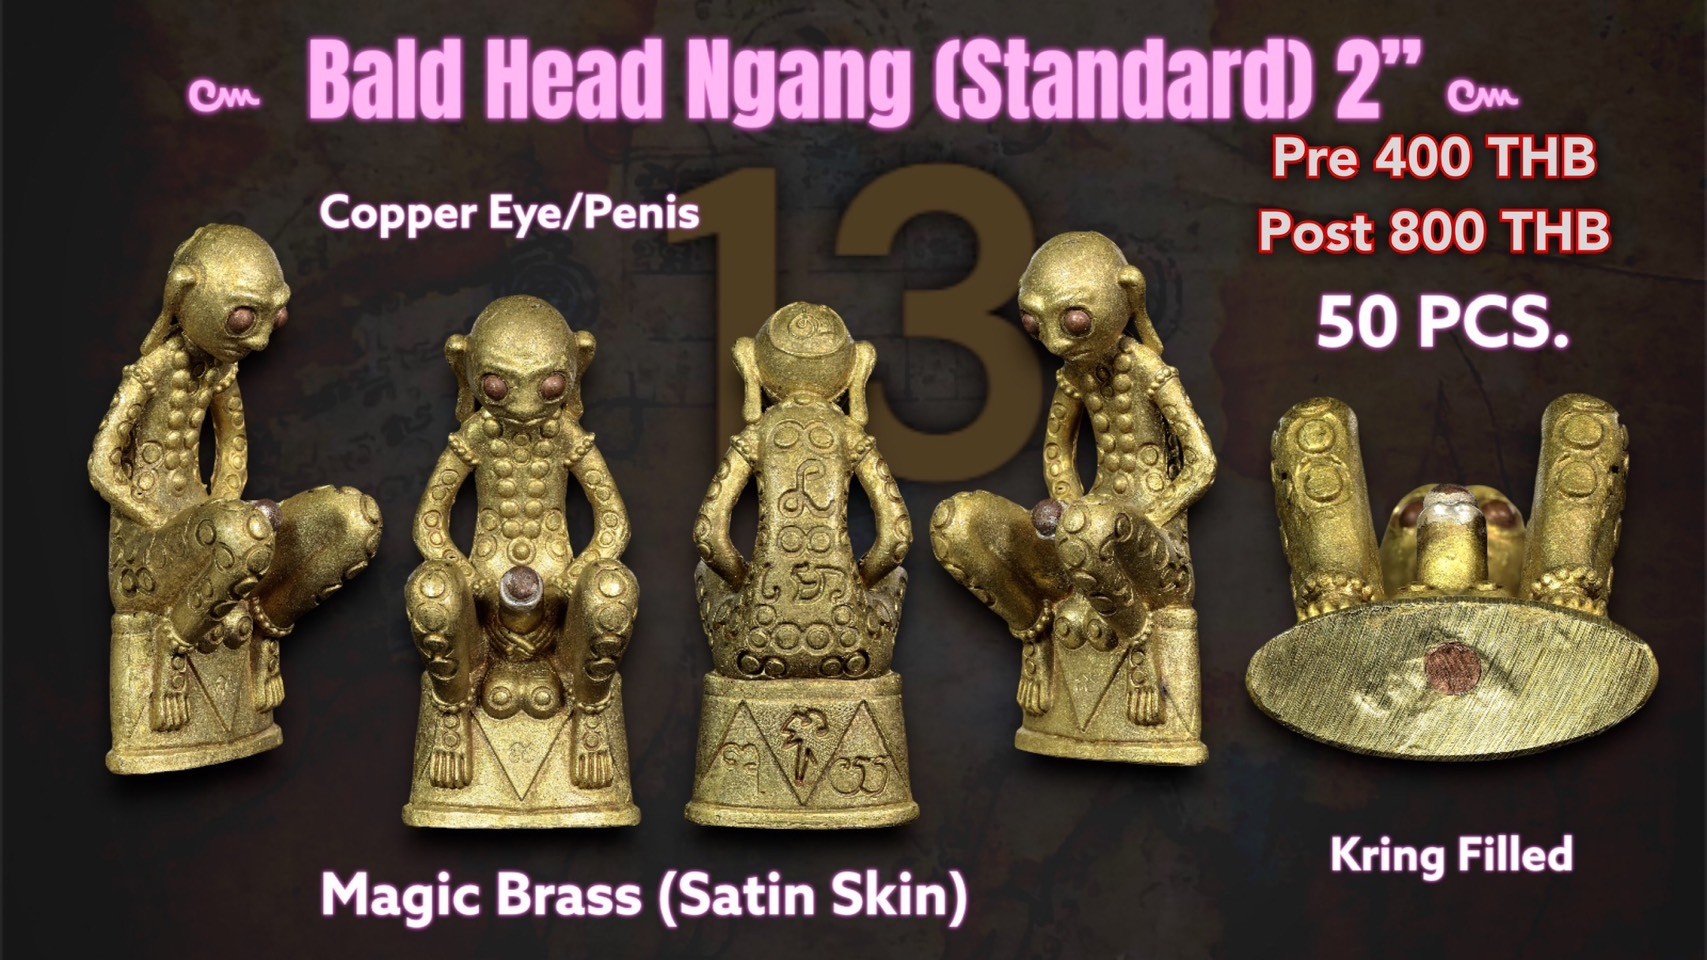 13.Bald Head Ngang Magic Brass (Satin Skin) 2 inches